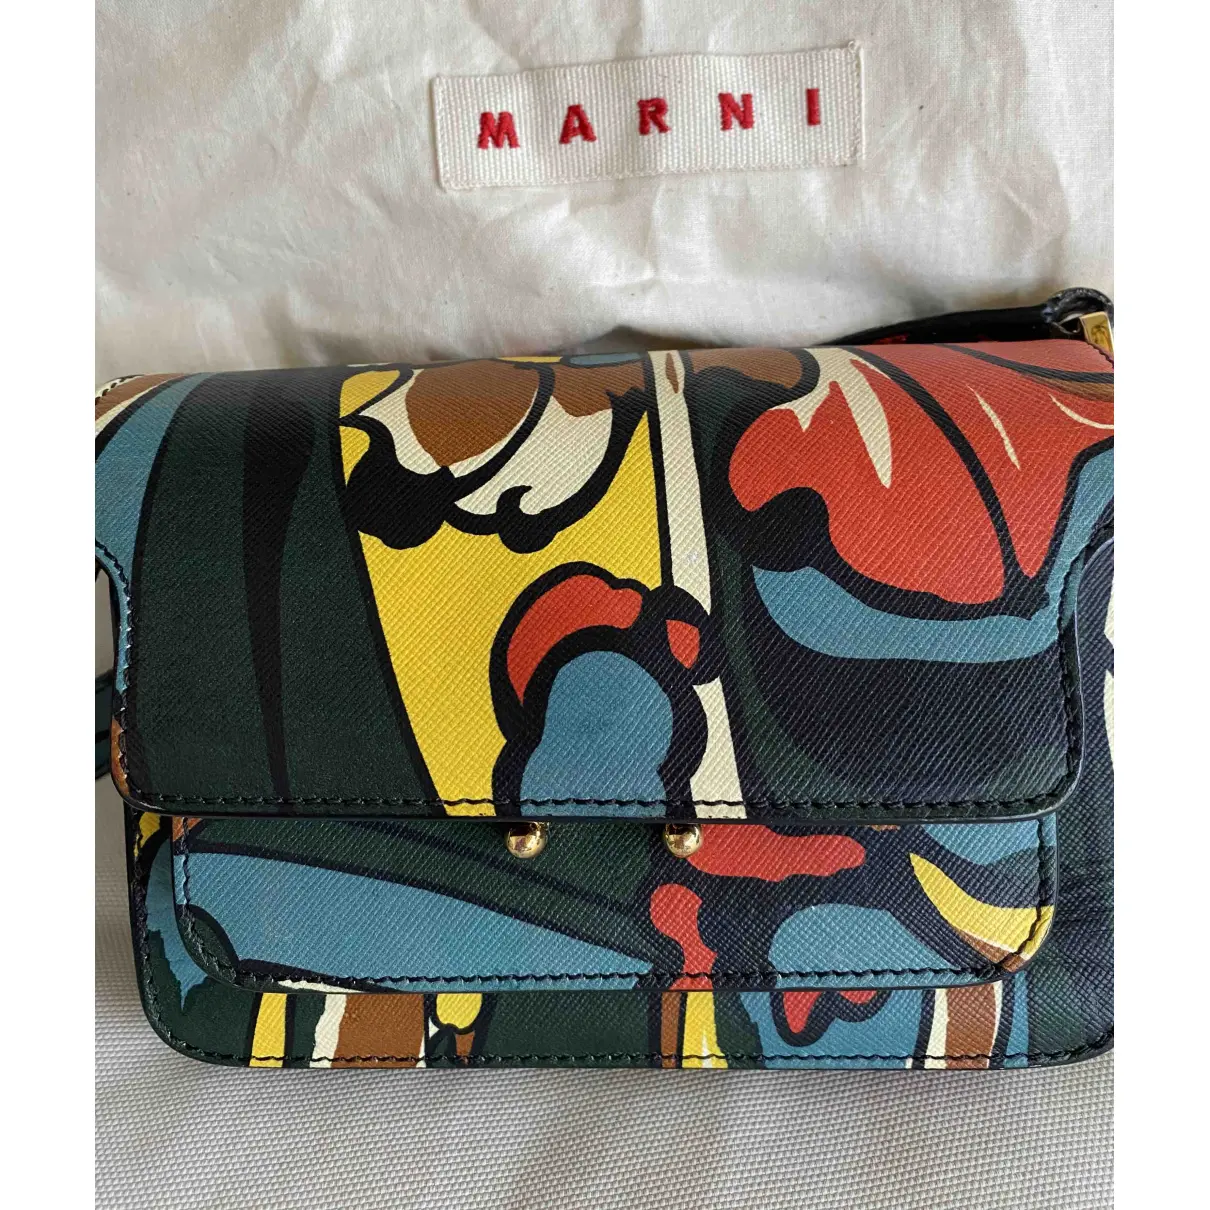 Luxury Marni Handbags Women